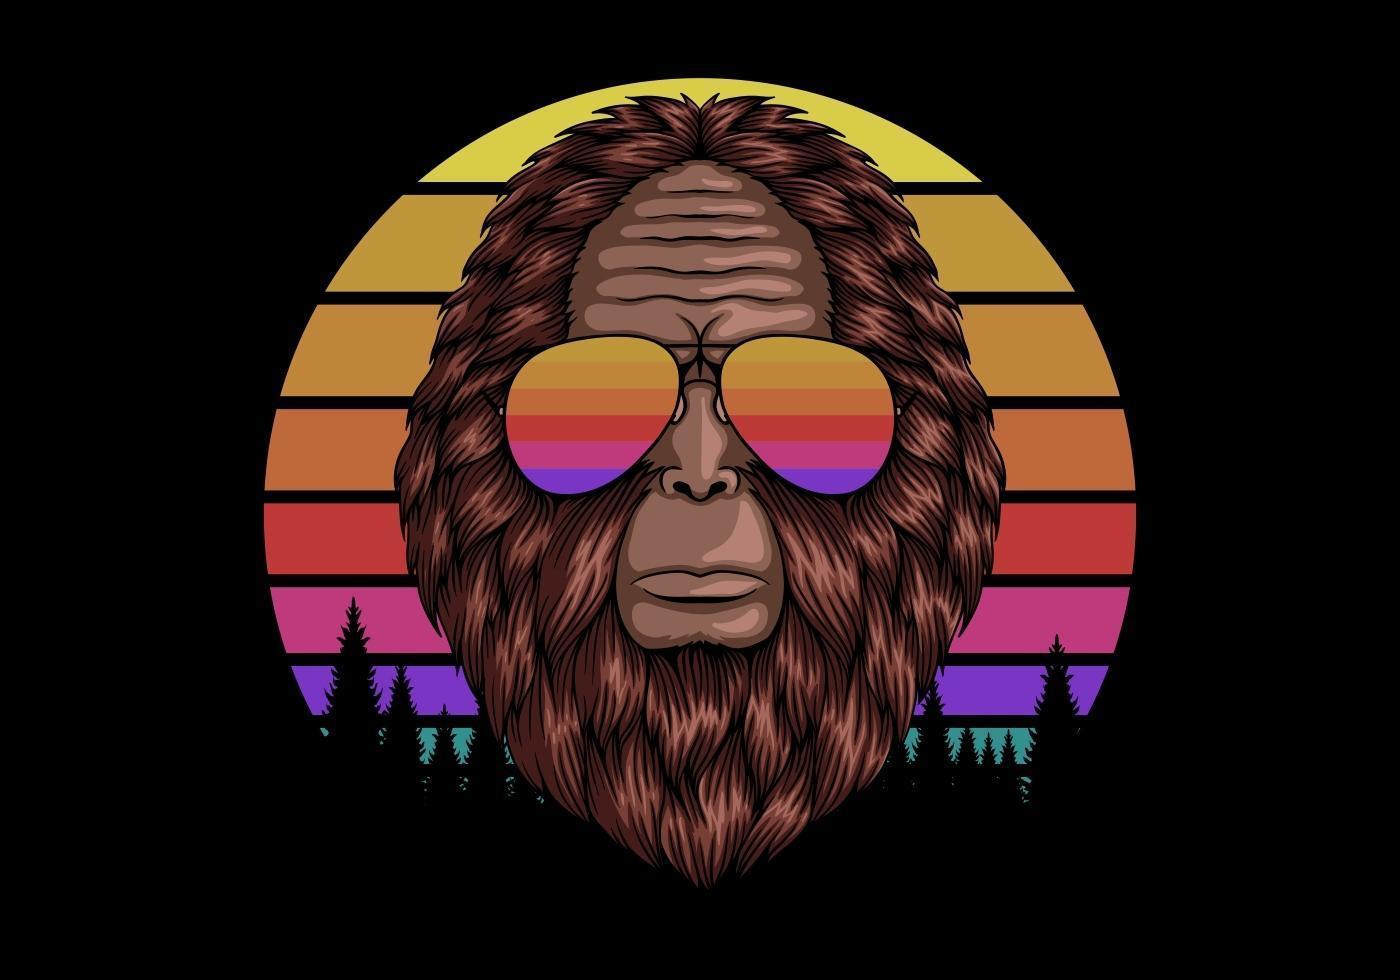 Bigfoot head with sunglasses sunset retro vector illustration